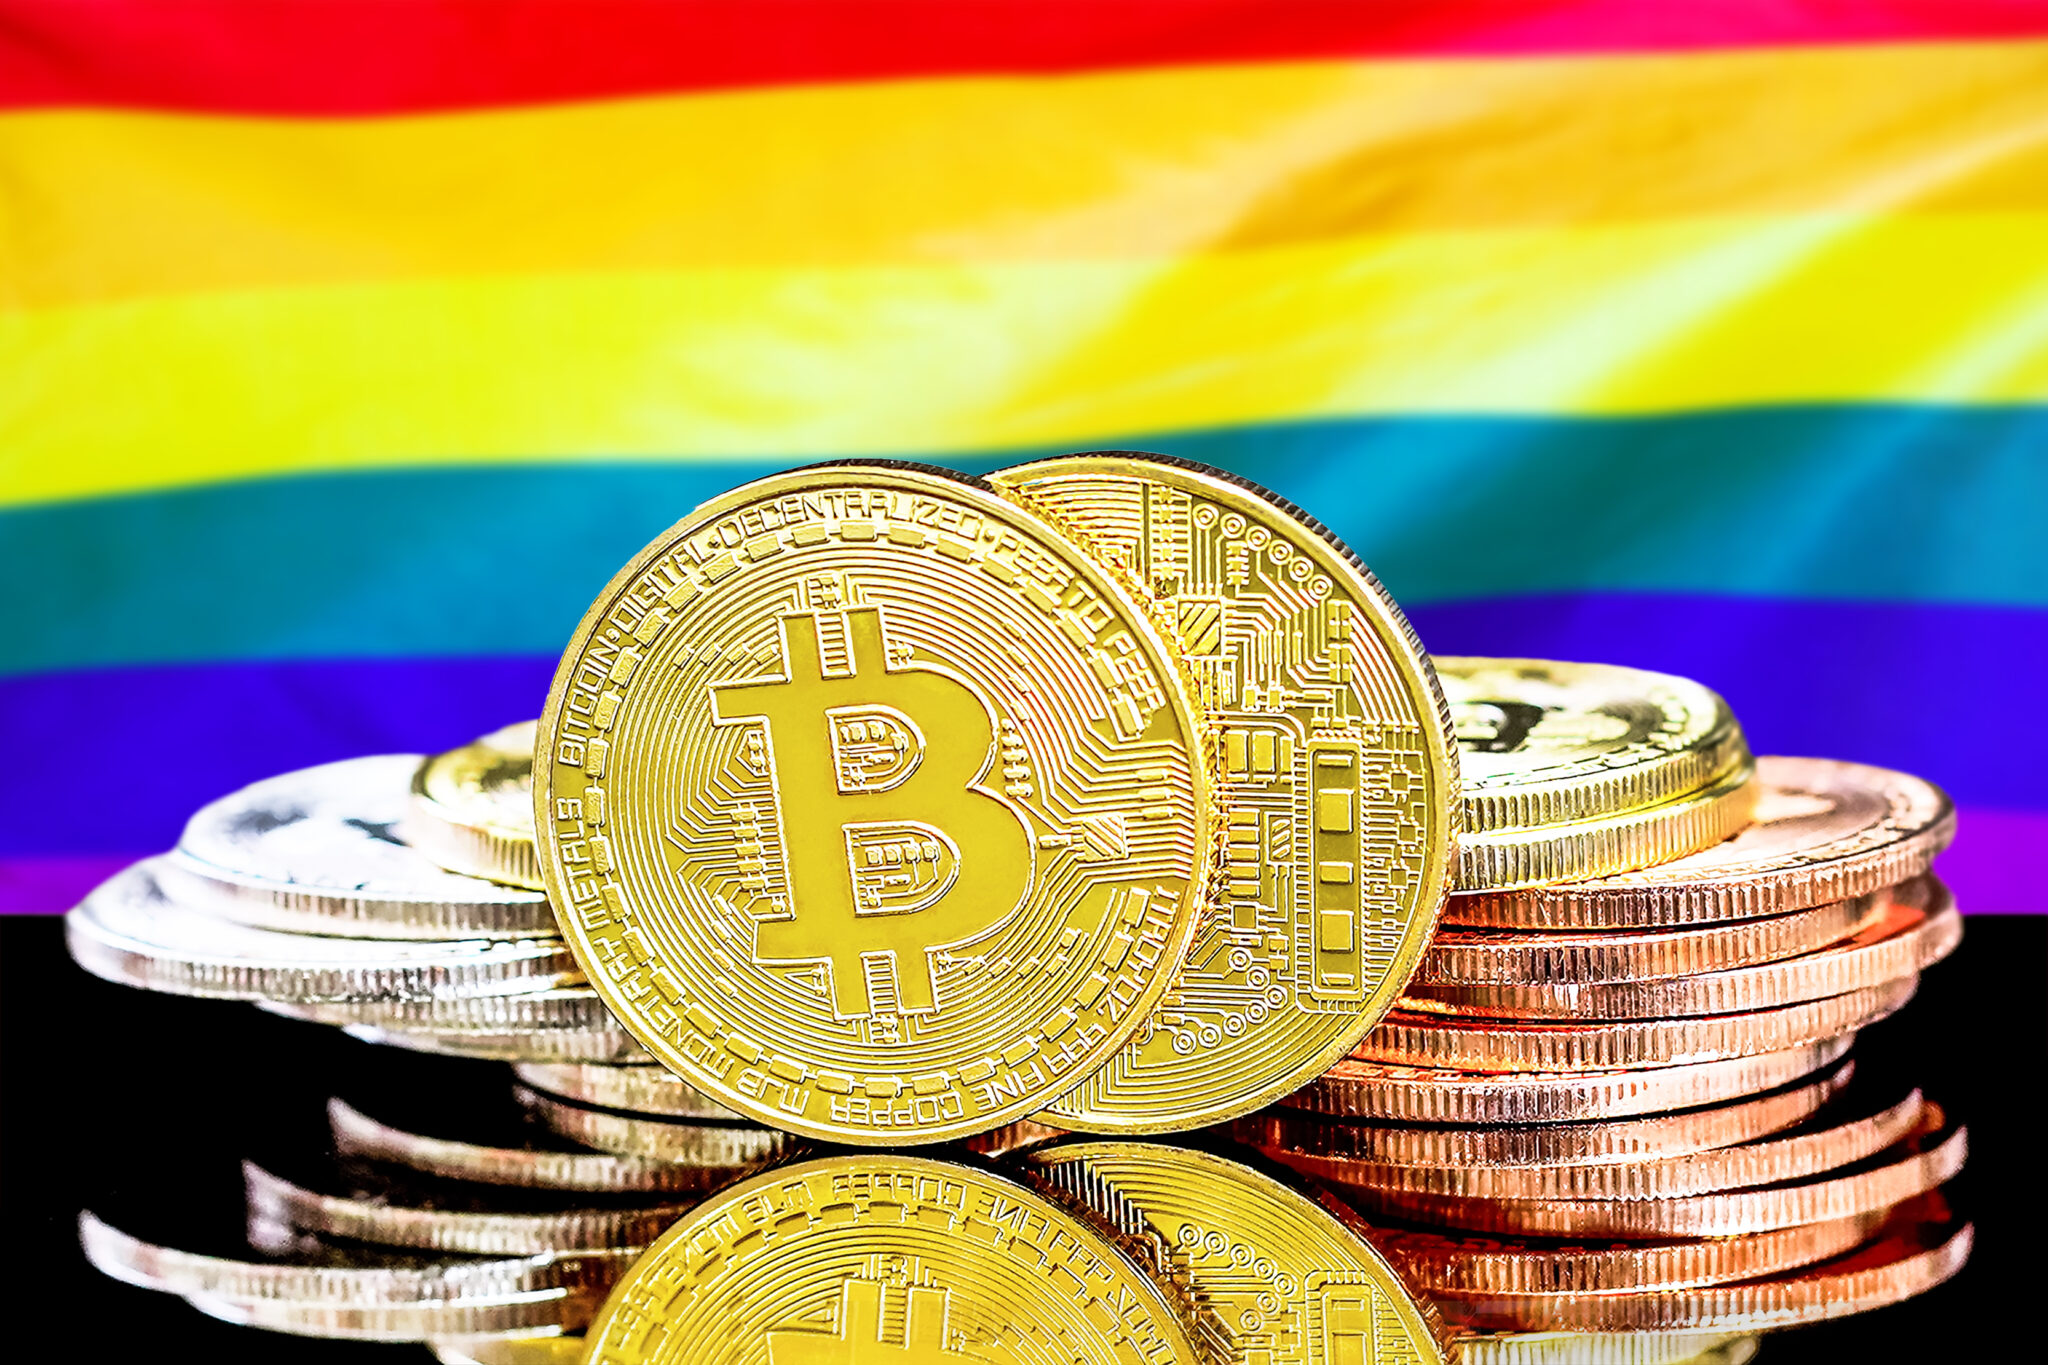 bitcoins on LGBT gay flag background